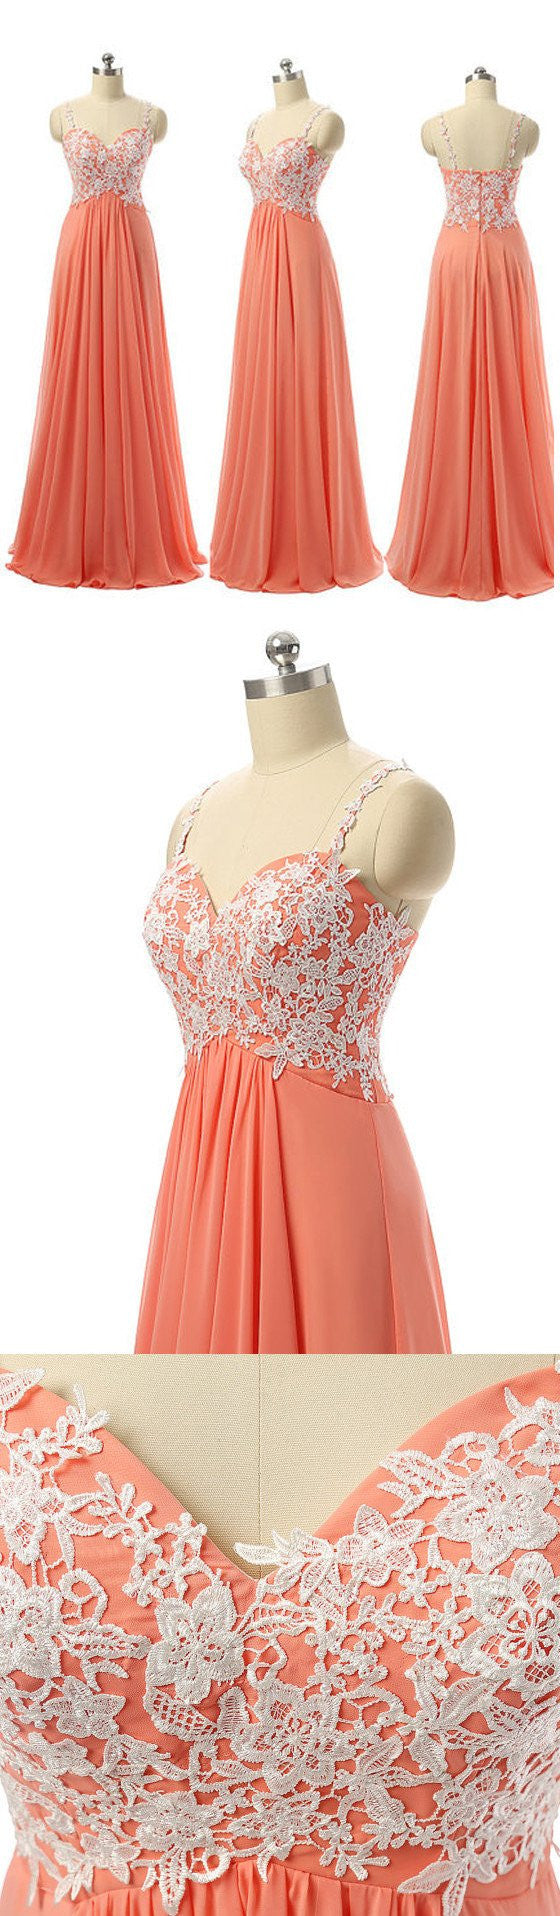 Coral Bridesmaid Dresses,Lace Top Bridesmaid Dresses,Neutral Bridesmaid ...